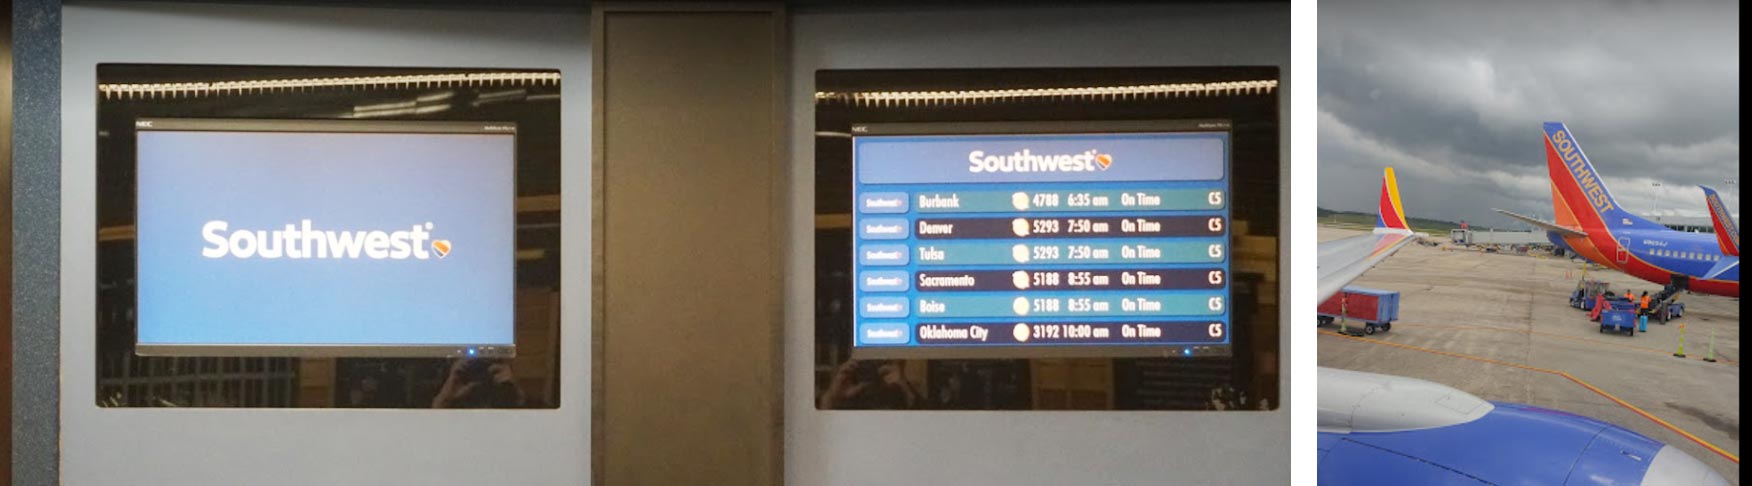 LAS: Southwest check-in terminal